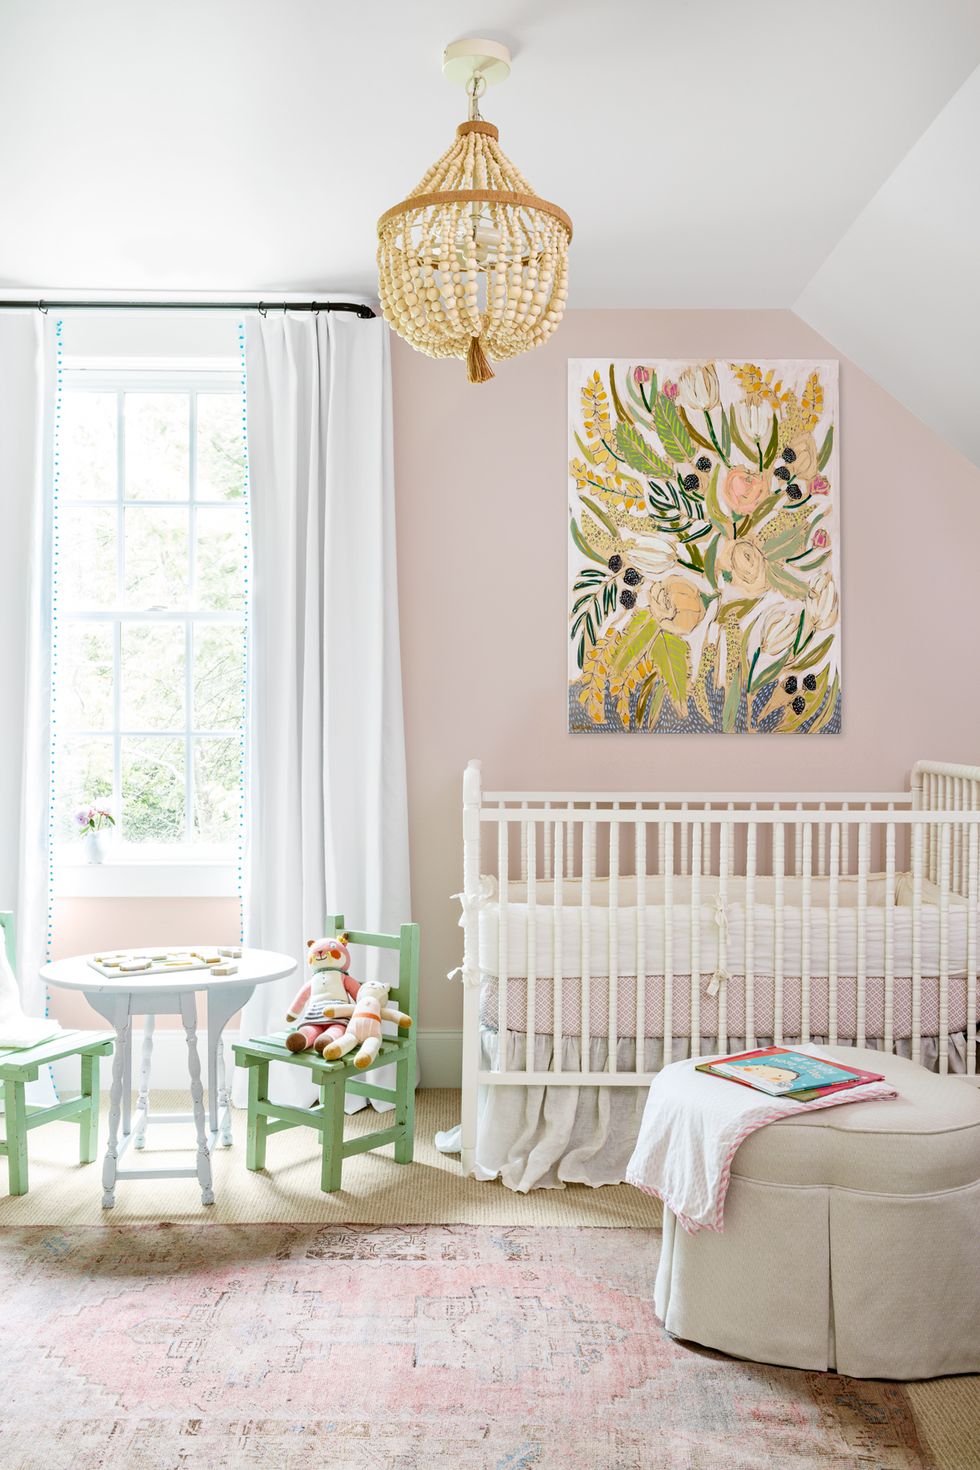 Keys to decorate a Montessori baby room